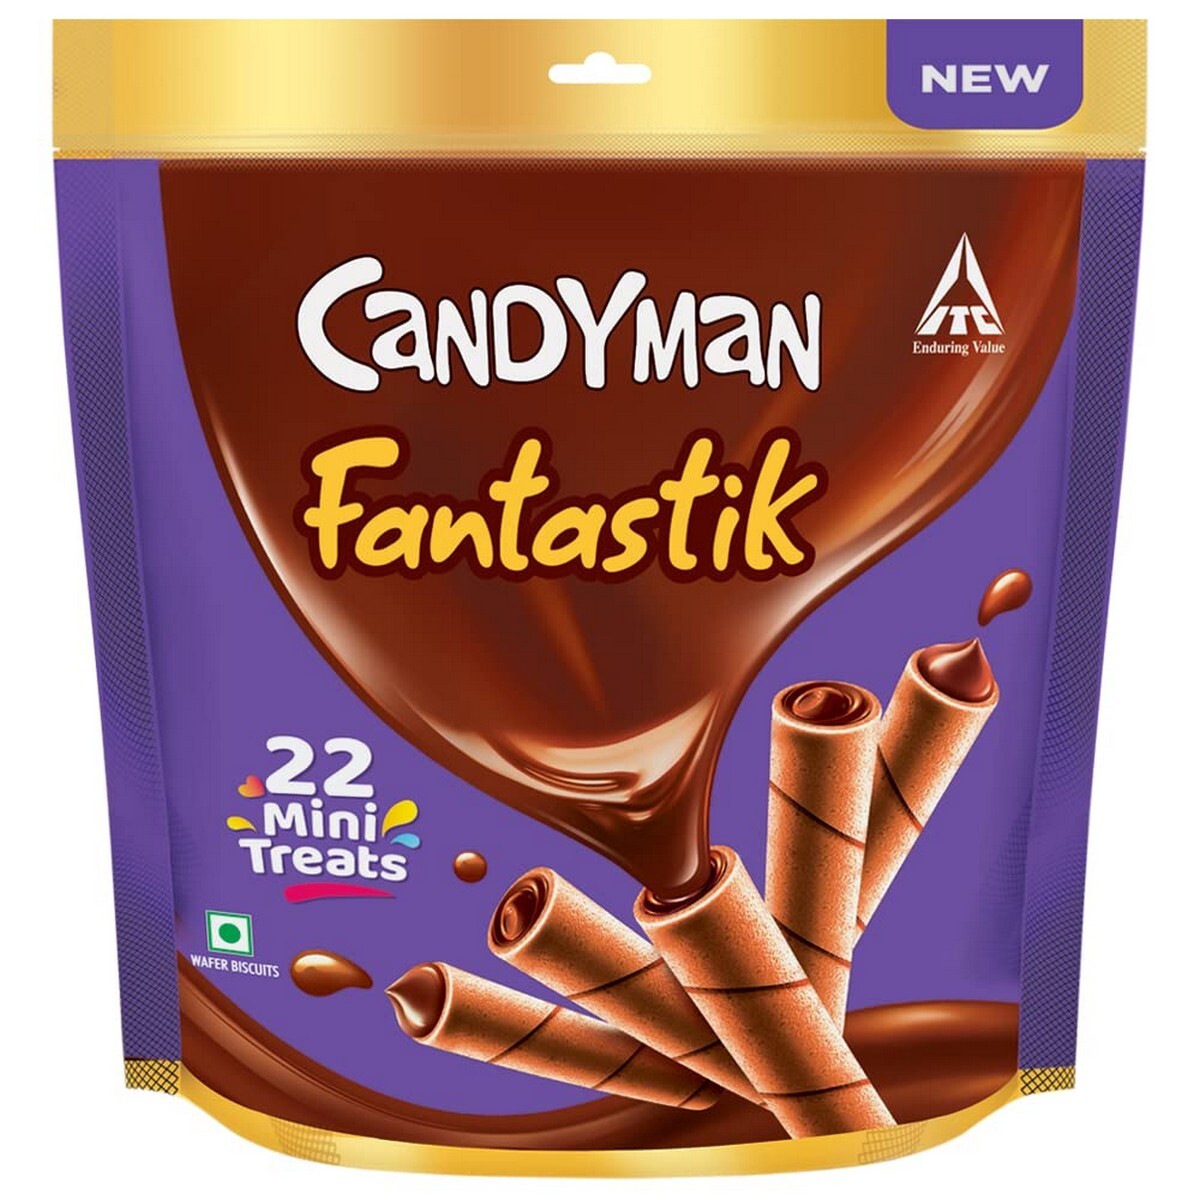 Candyman Fantastik Home Pack 125gm